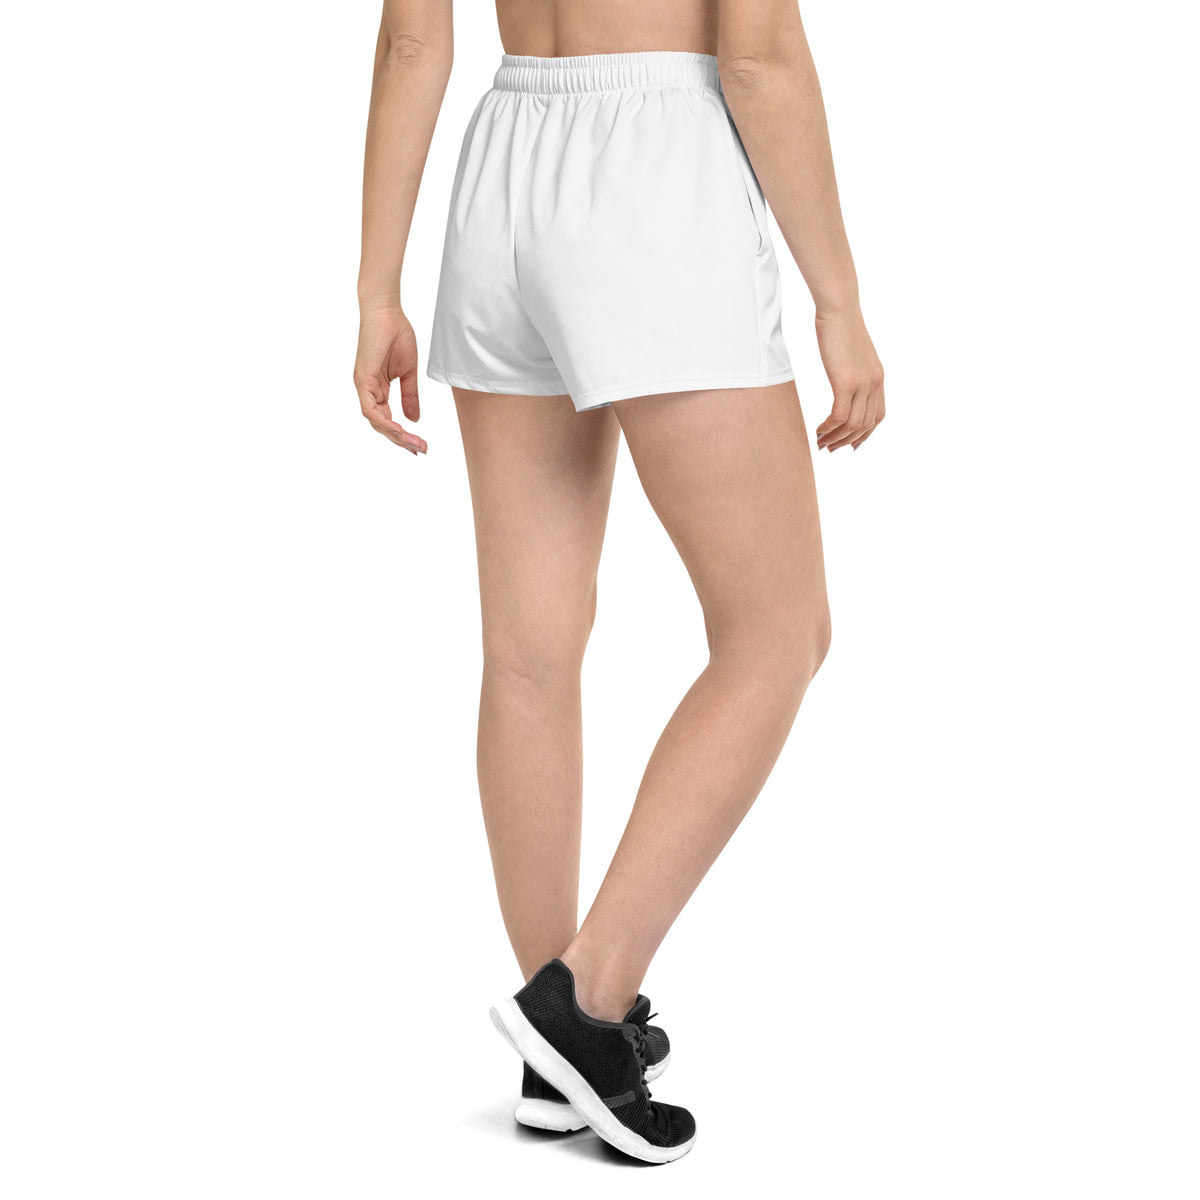 Eco Retro Vibe Women’s Recycled Athletic Shorts - Retro Vibe Collection - Area F Island Clothing